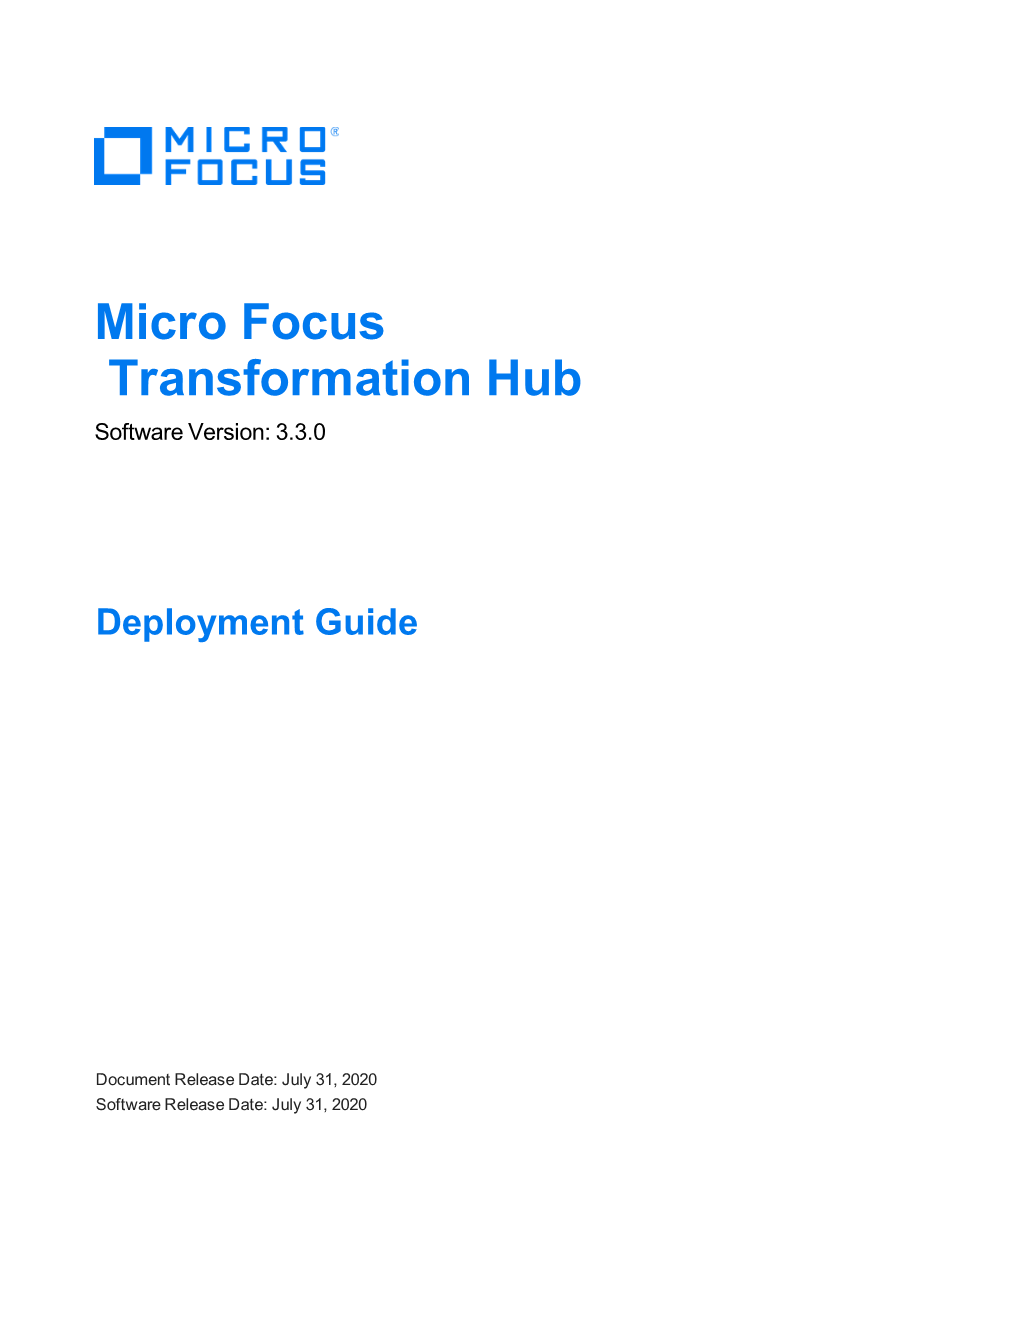 Transformation Hub Deployment Guide